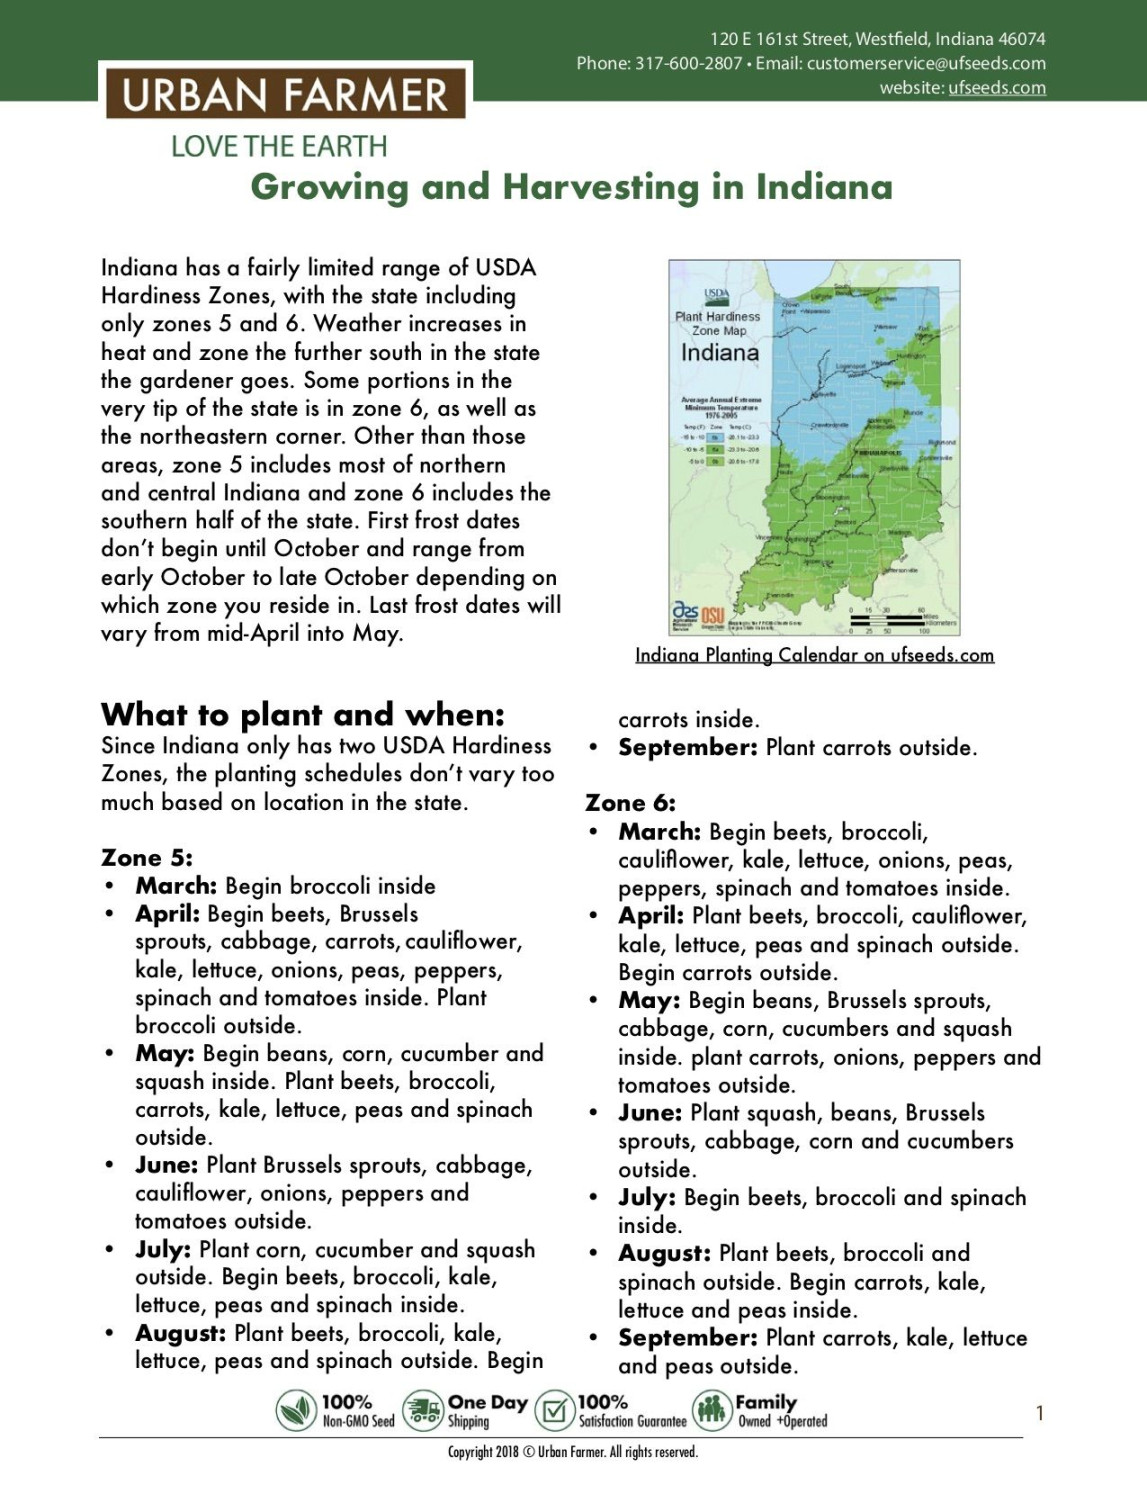 Indiana Vegetable Planting Calendar  When to plant garden